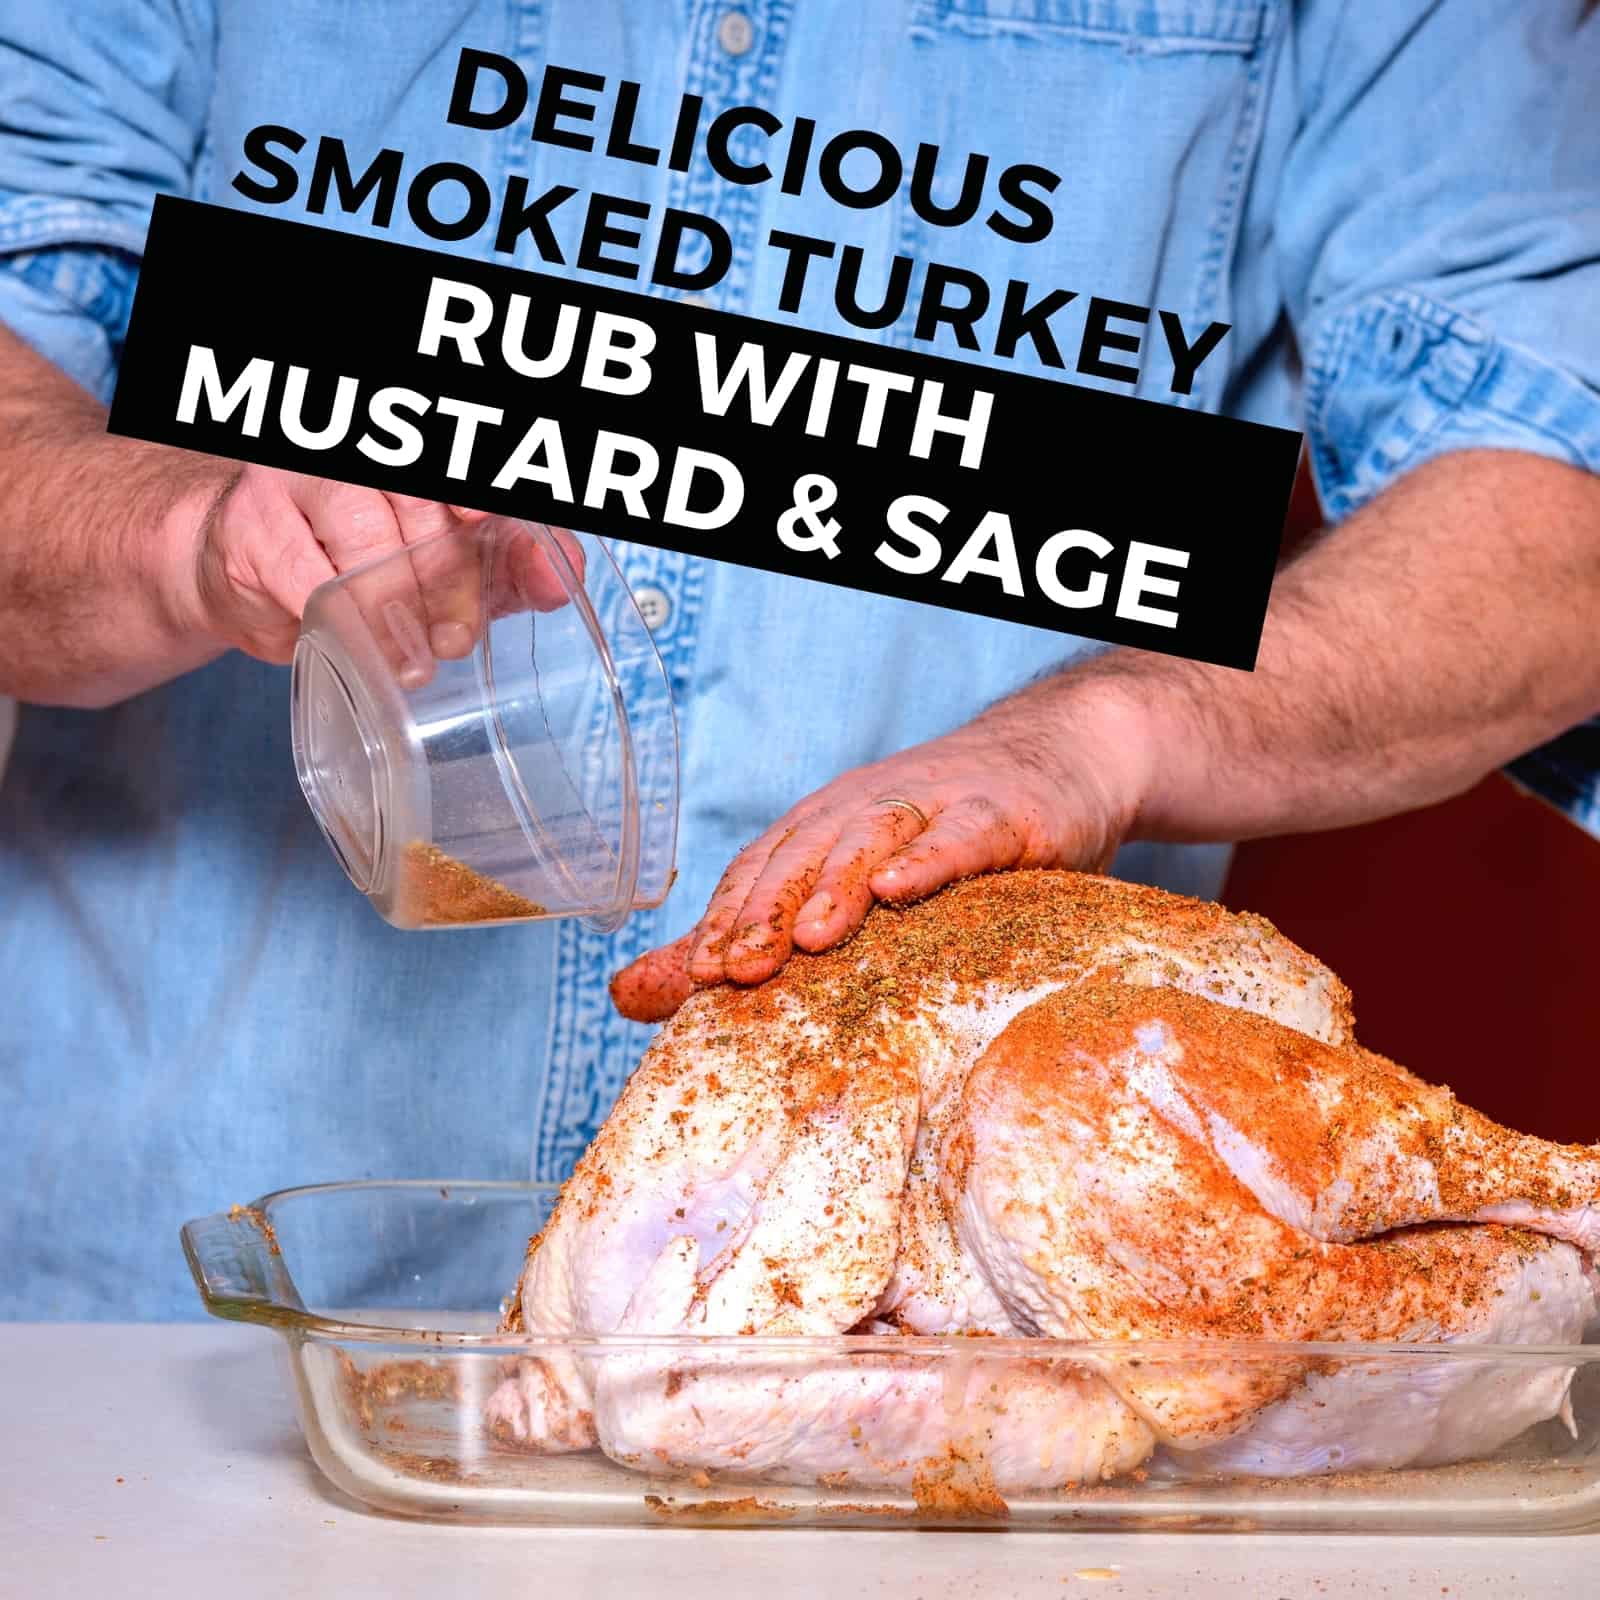 Delicious smoked turkey rub with mustard & sage